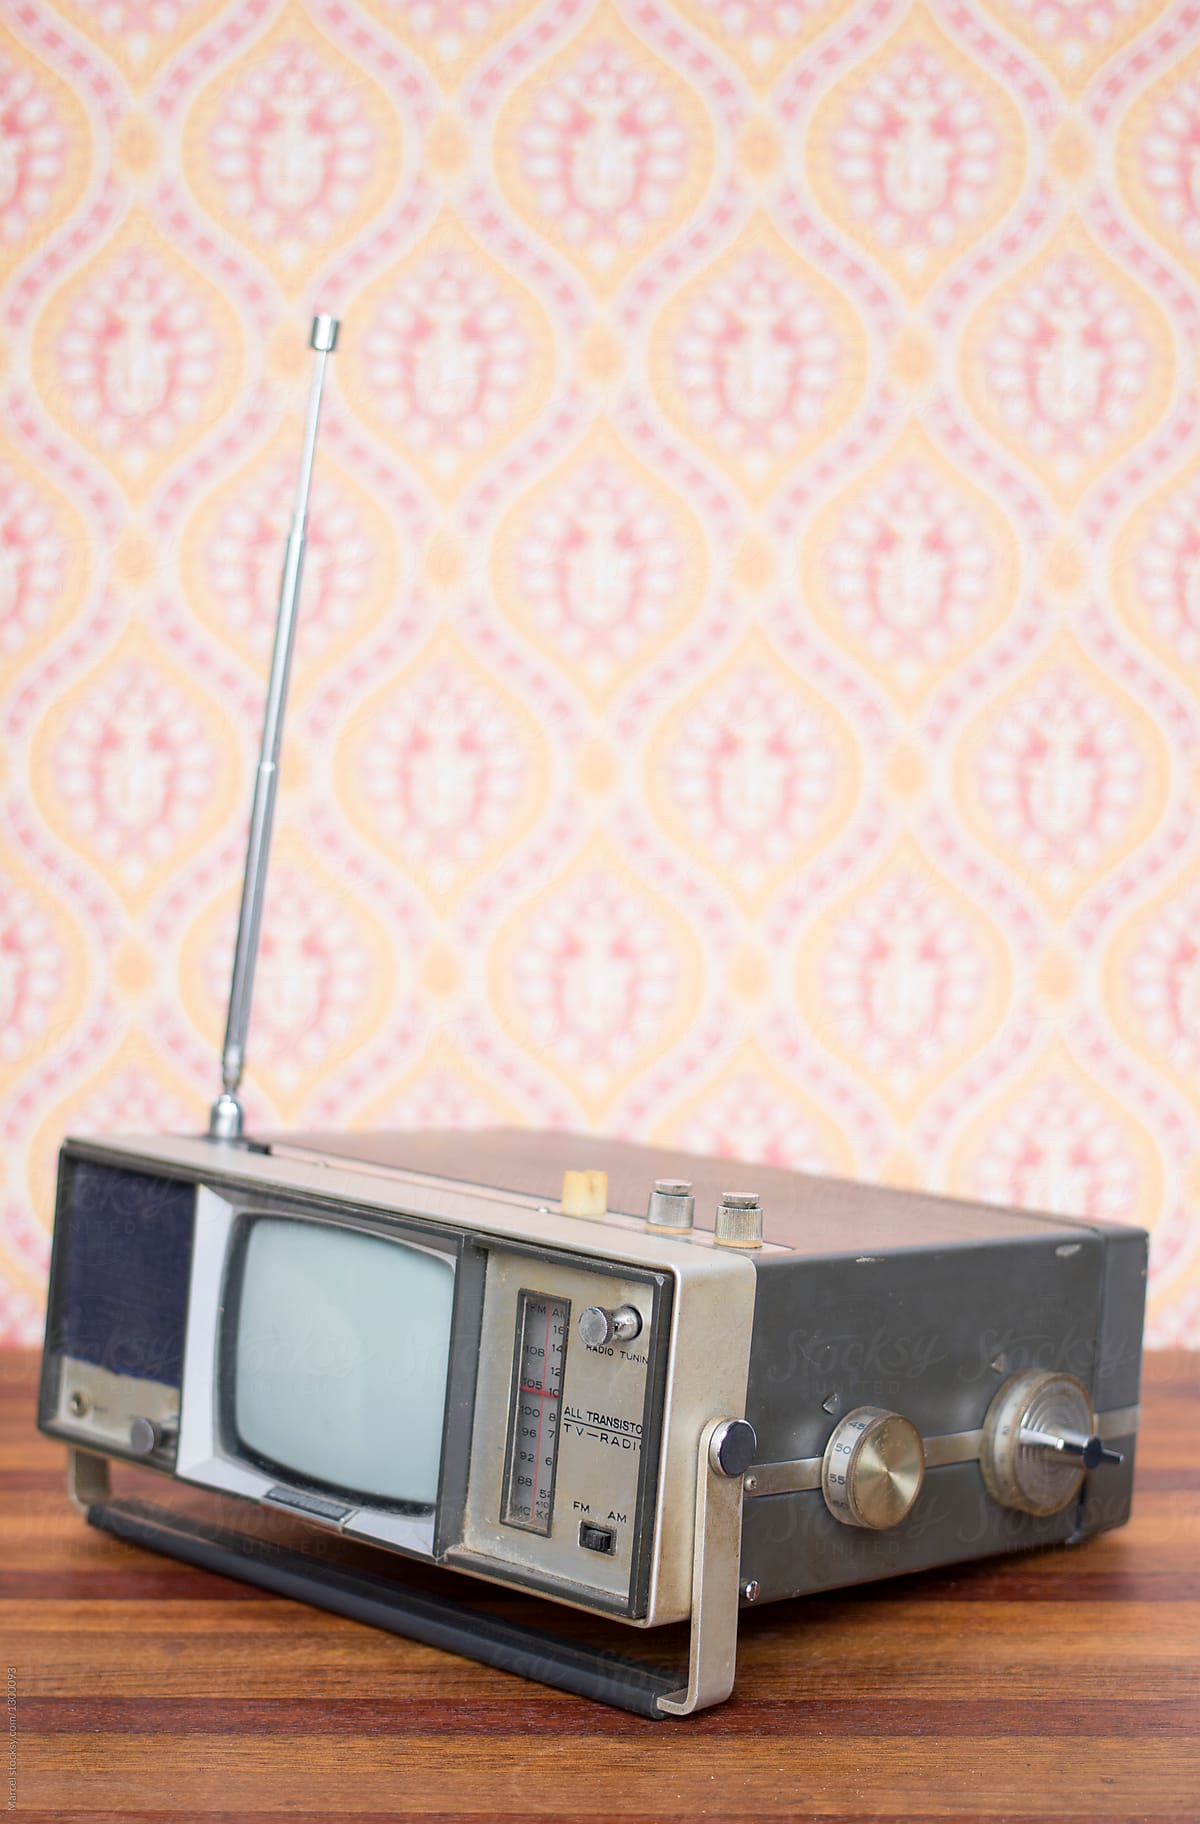 Vintage Portable Televison By Stocksy Contributor Marcel Stocksy